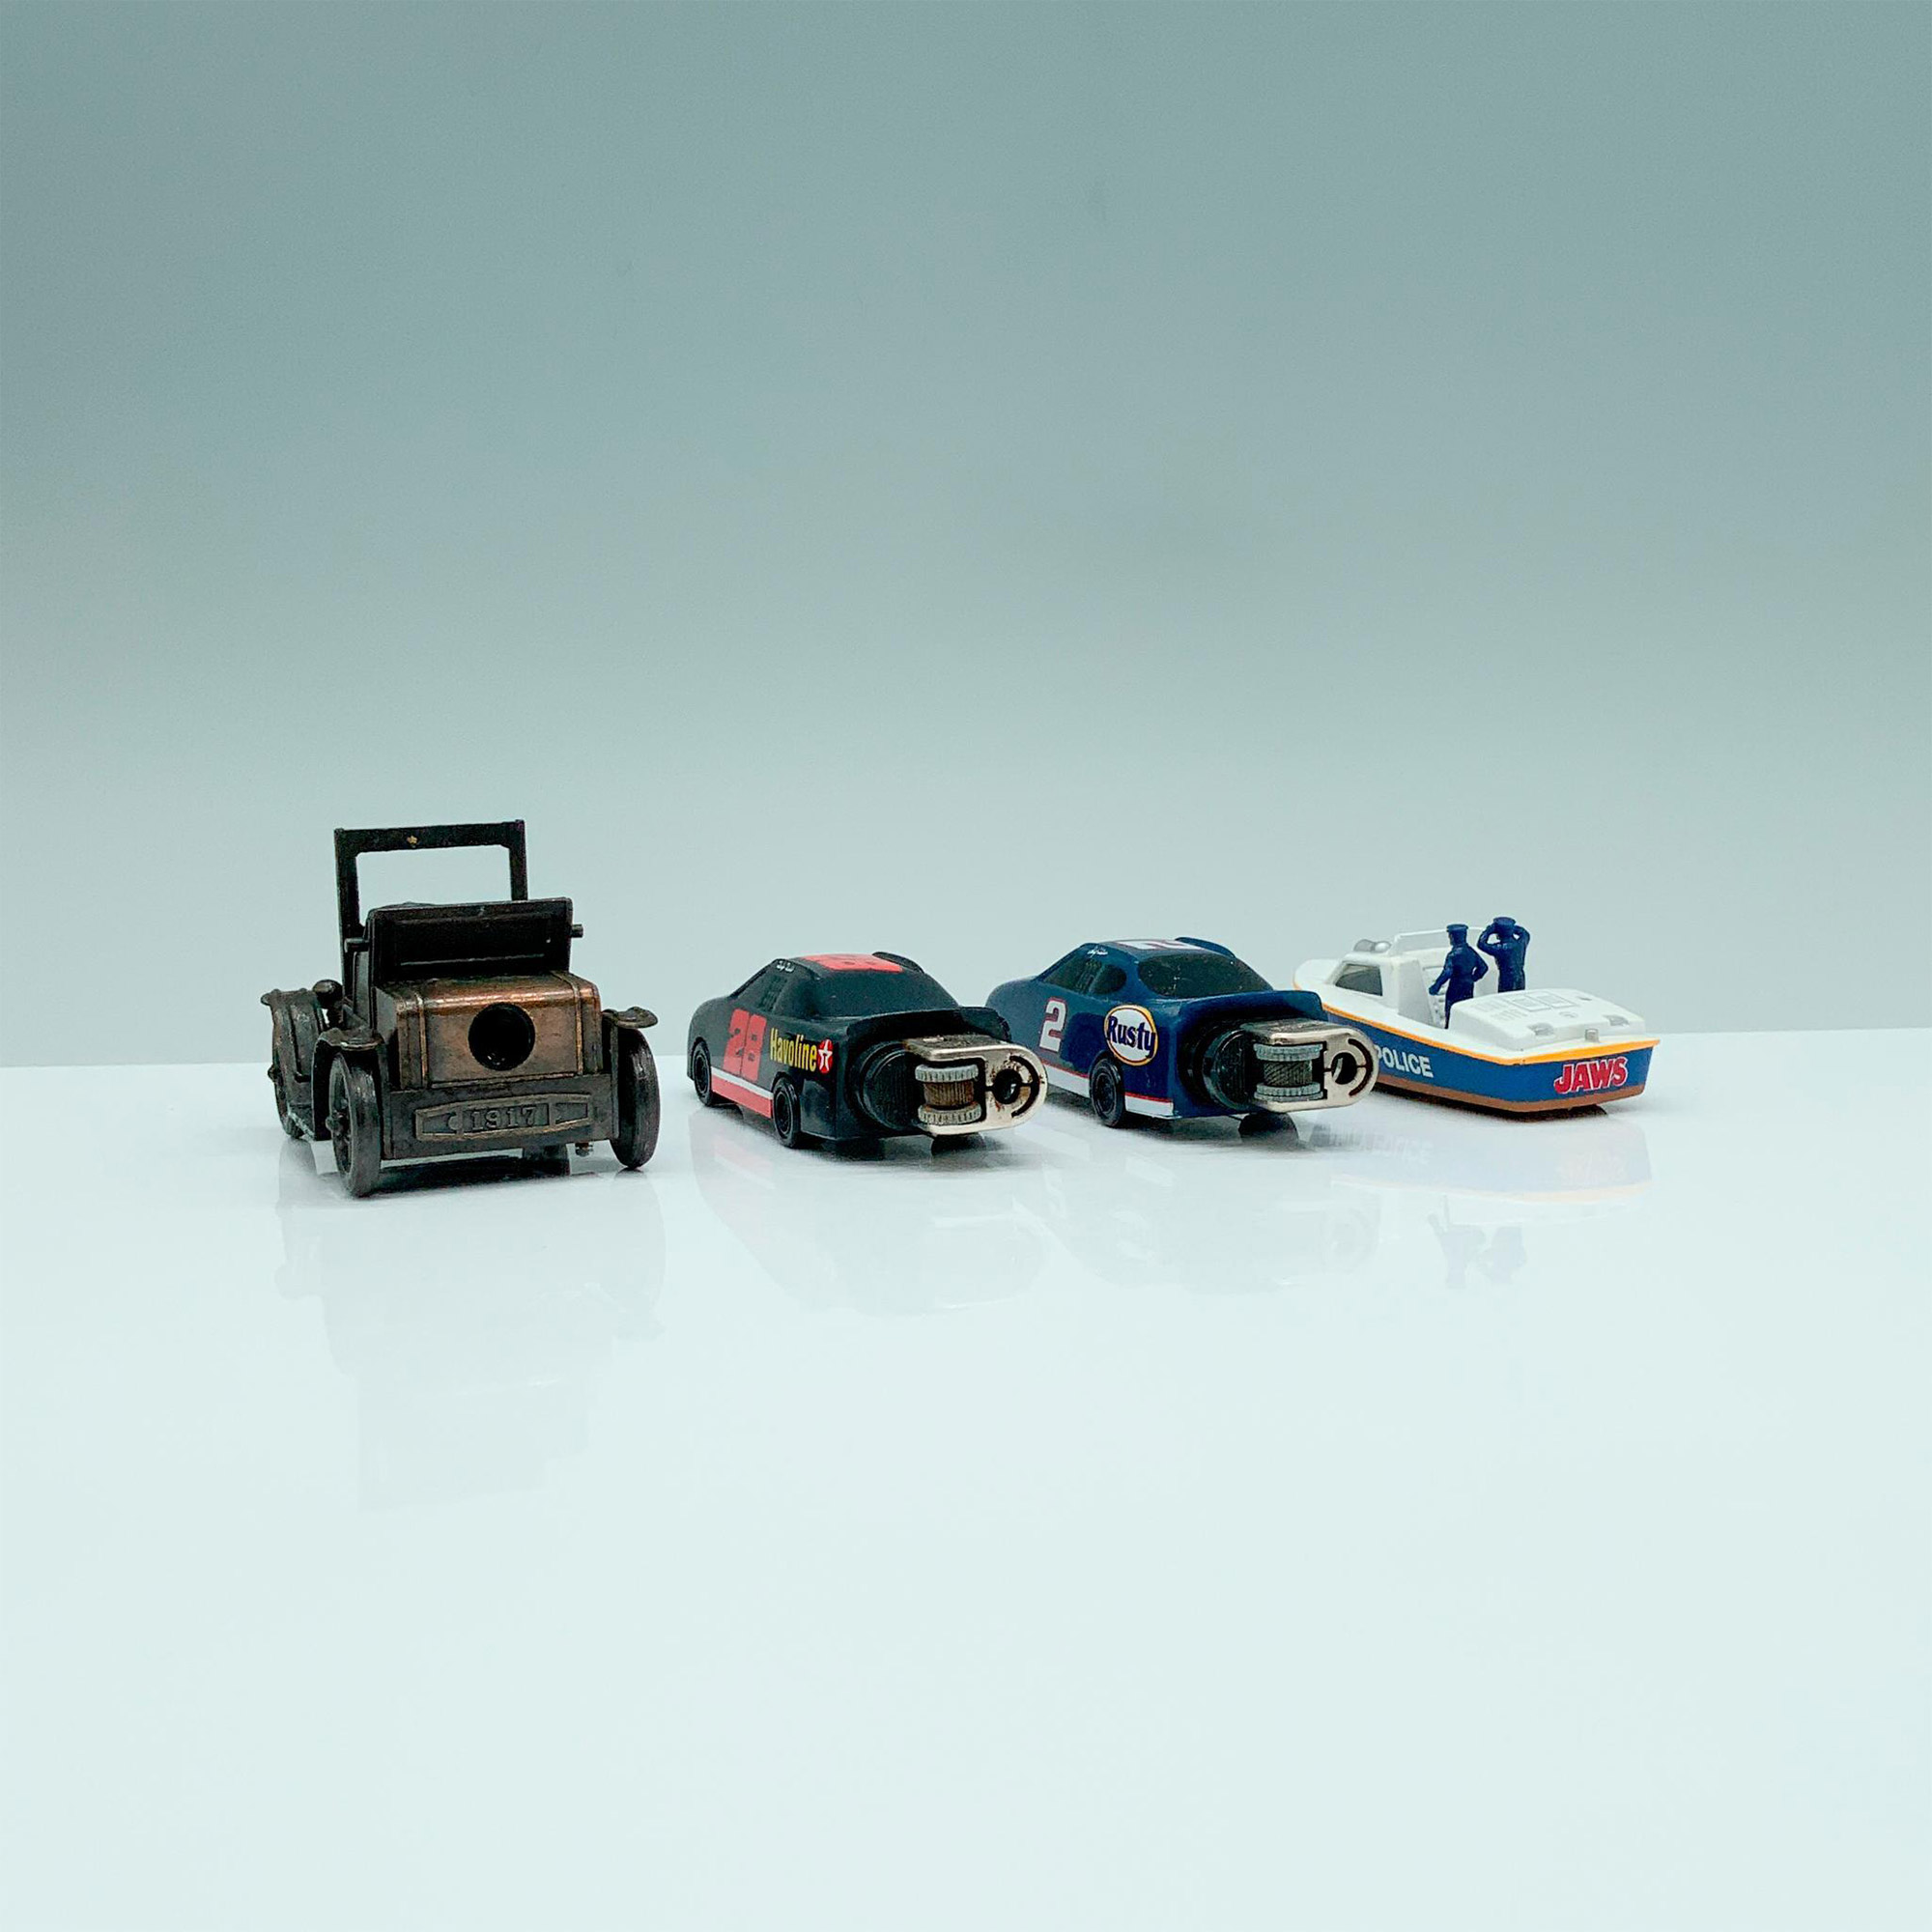 4pc Toy Car FigureTools and Boat Figure - Image 2 of 3